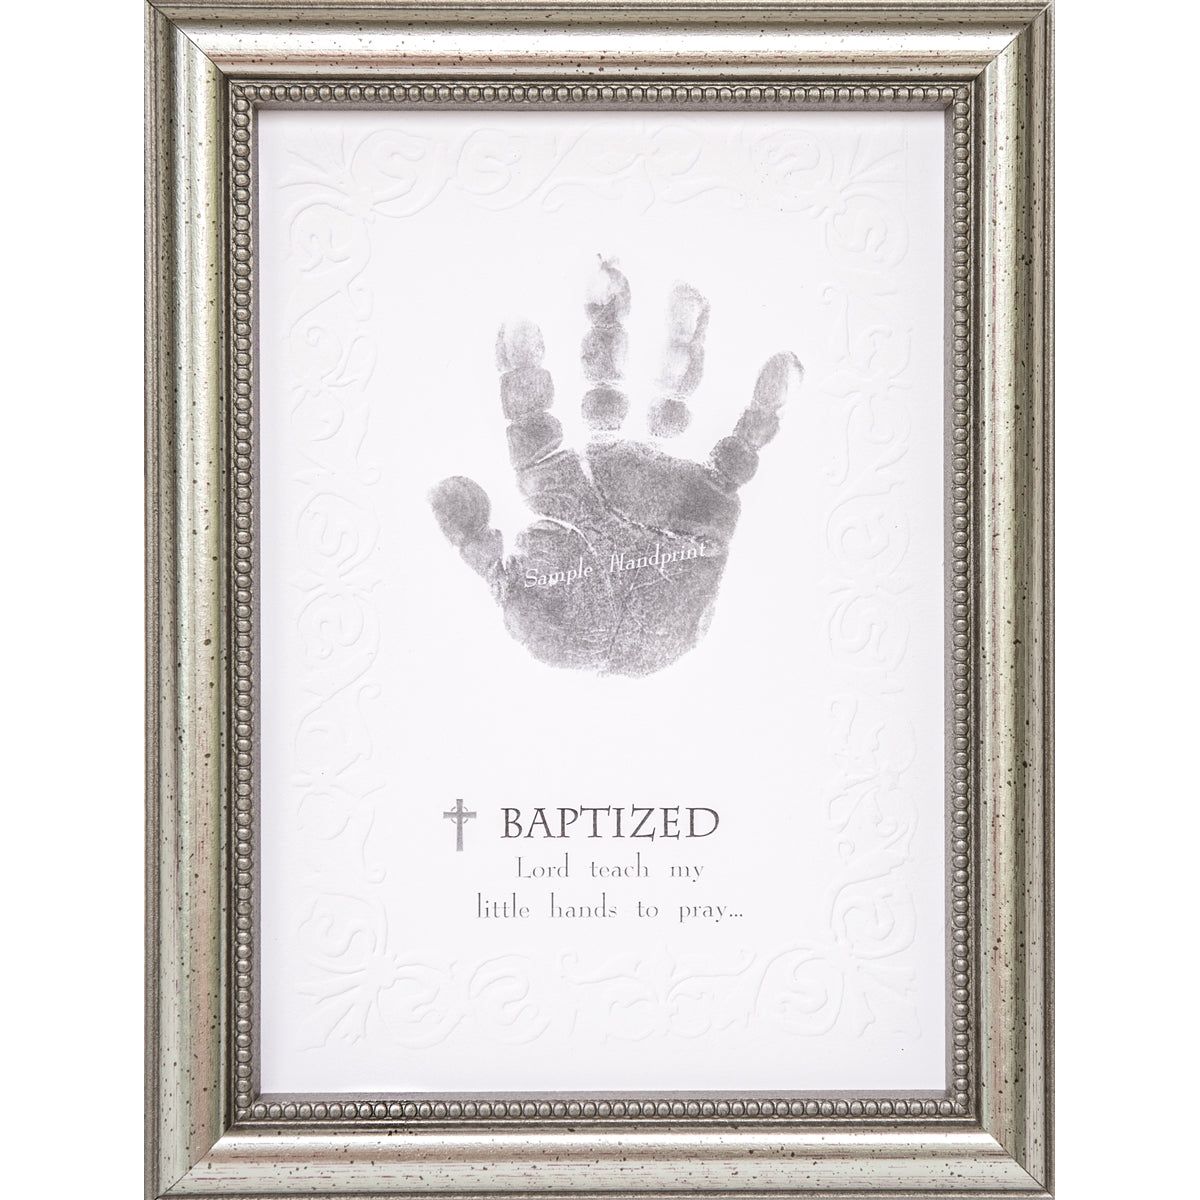 Baptism handprint keepsake in elegant frame in silver with embossed beaded design.